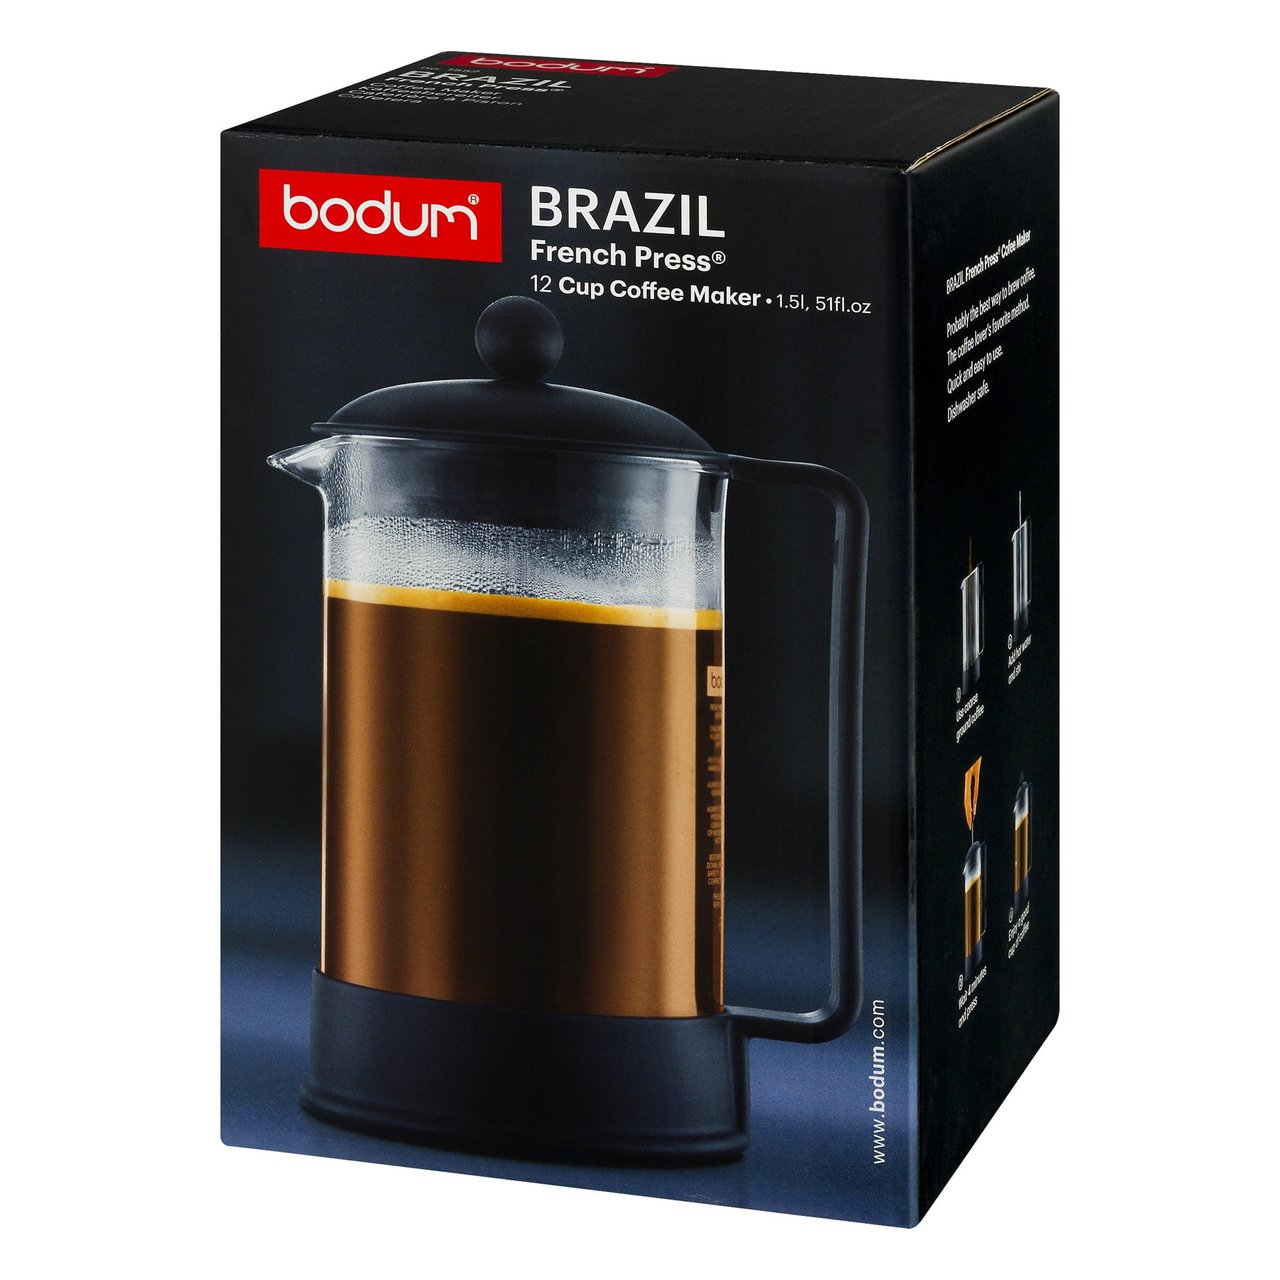 6 Black Bodum Brazil French Press Coffee Maker, 12-Cup, 1.5L Capacity